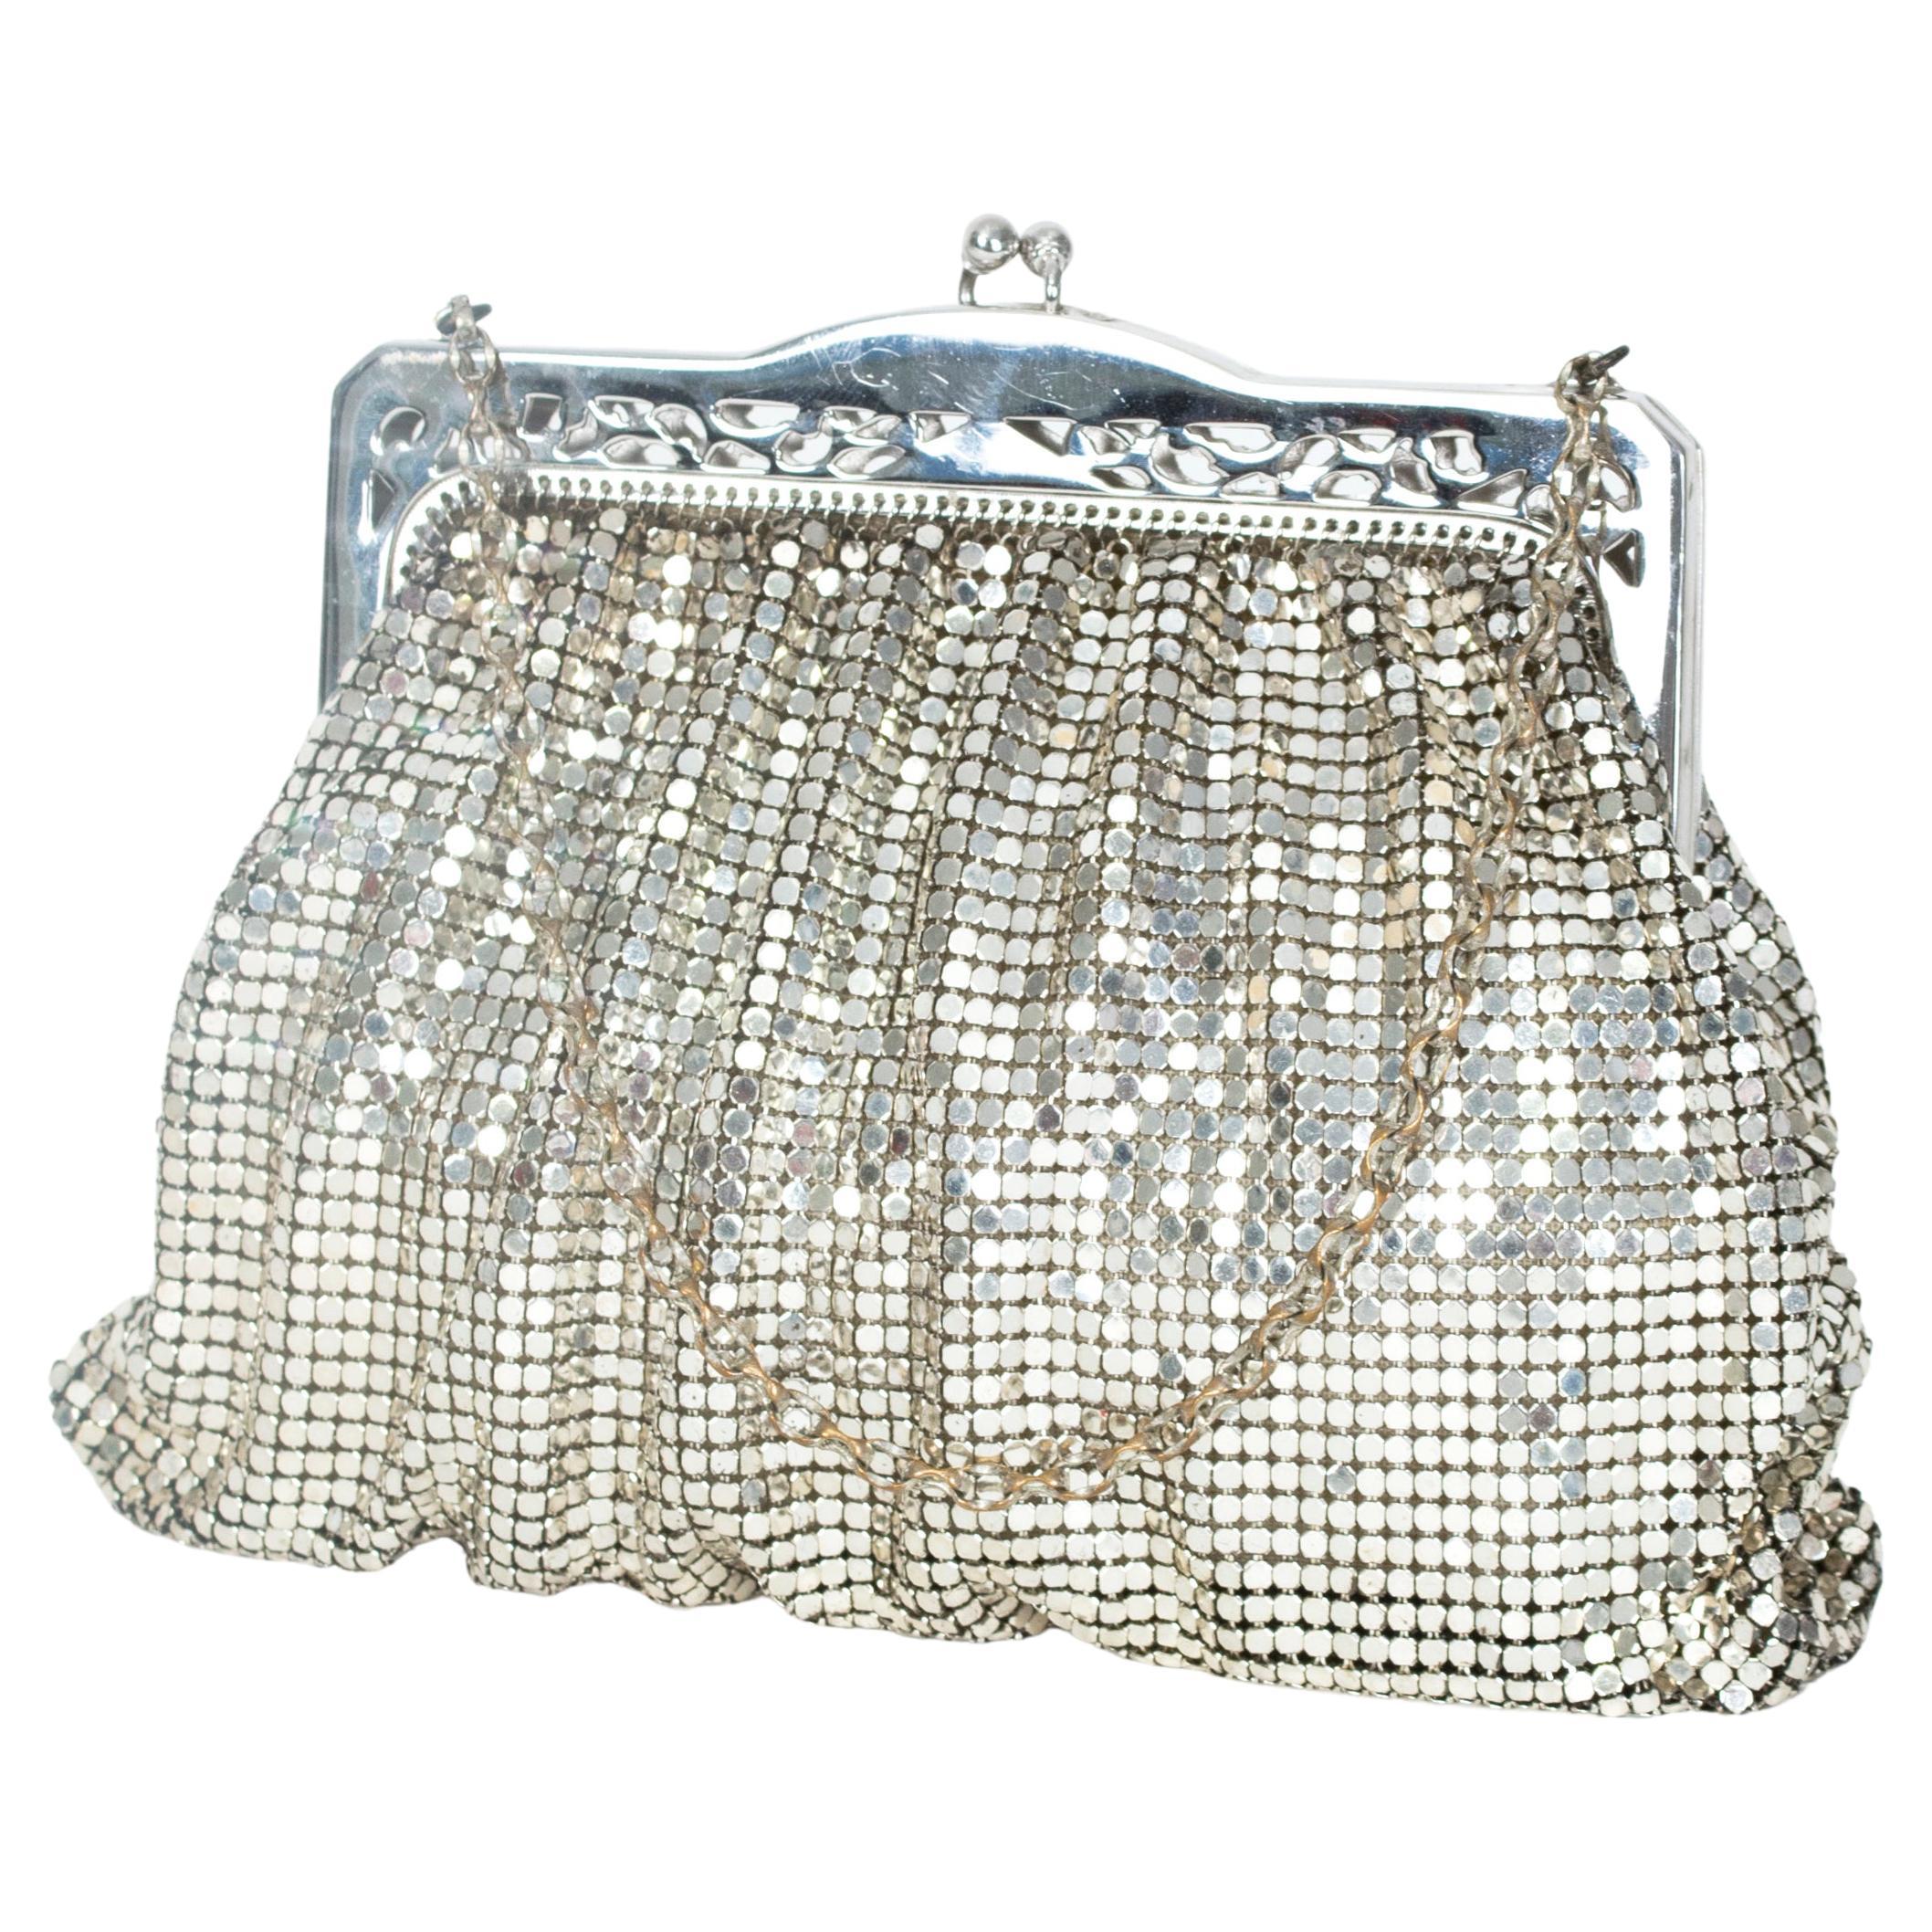 Three Whiting & Davis mesh purses